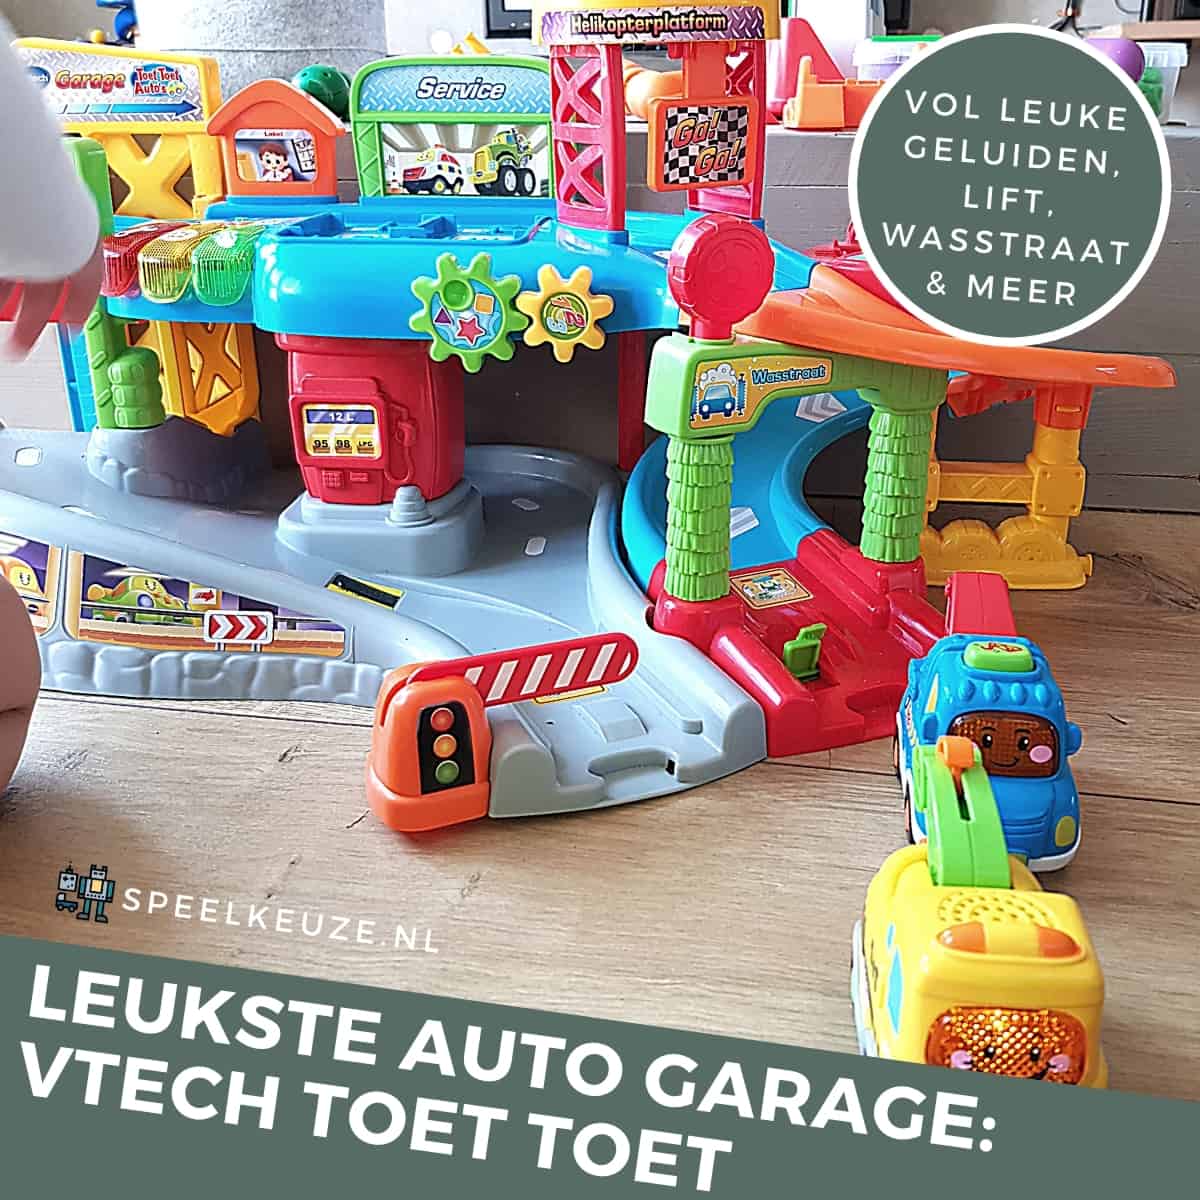 Leukste Auto garage: VTech Toet Toet Auto garage